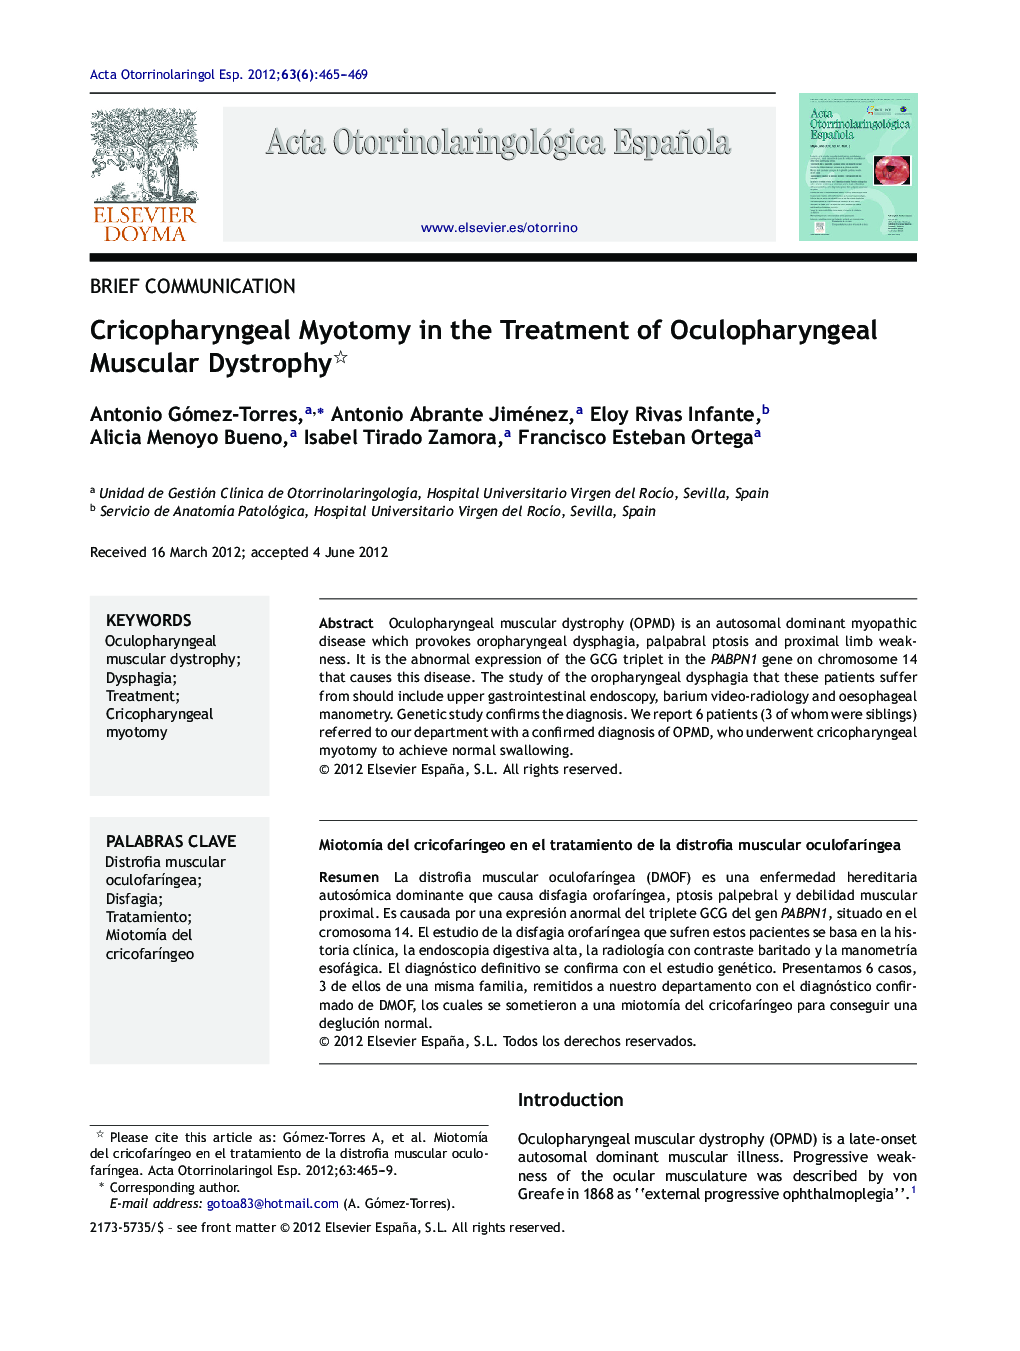 Cricopharyngeal Myotomy in the Treatment of Oculopharyngeal Muscular Dystrophy 